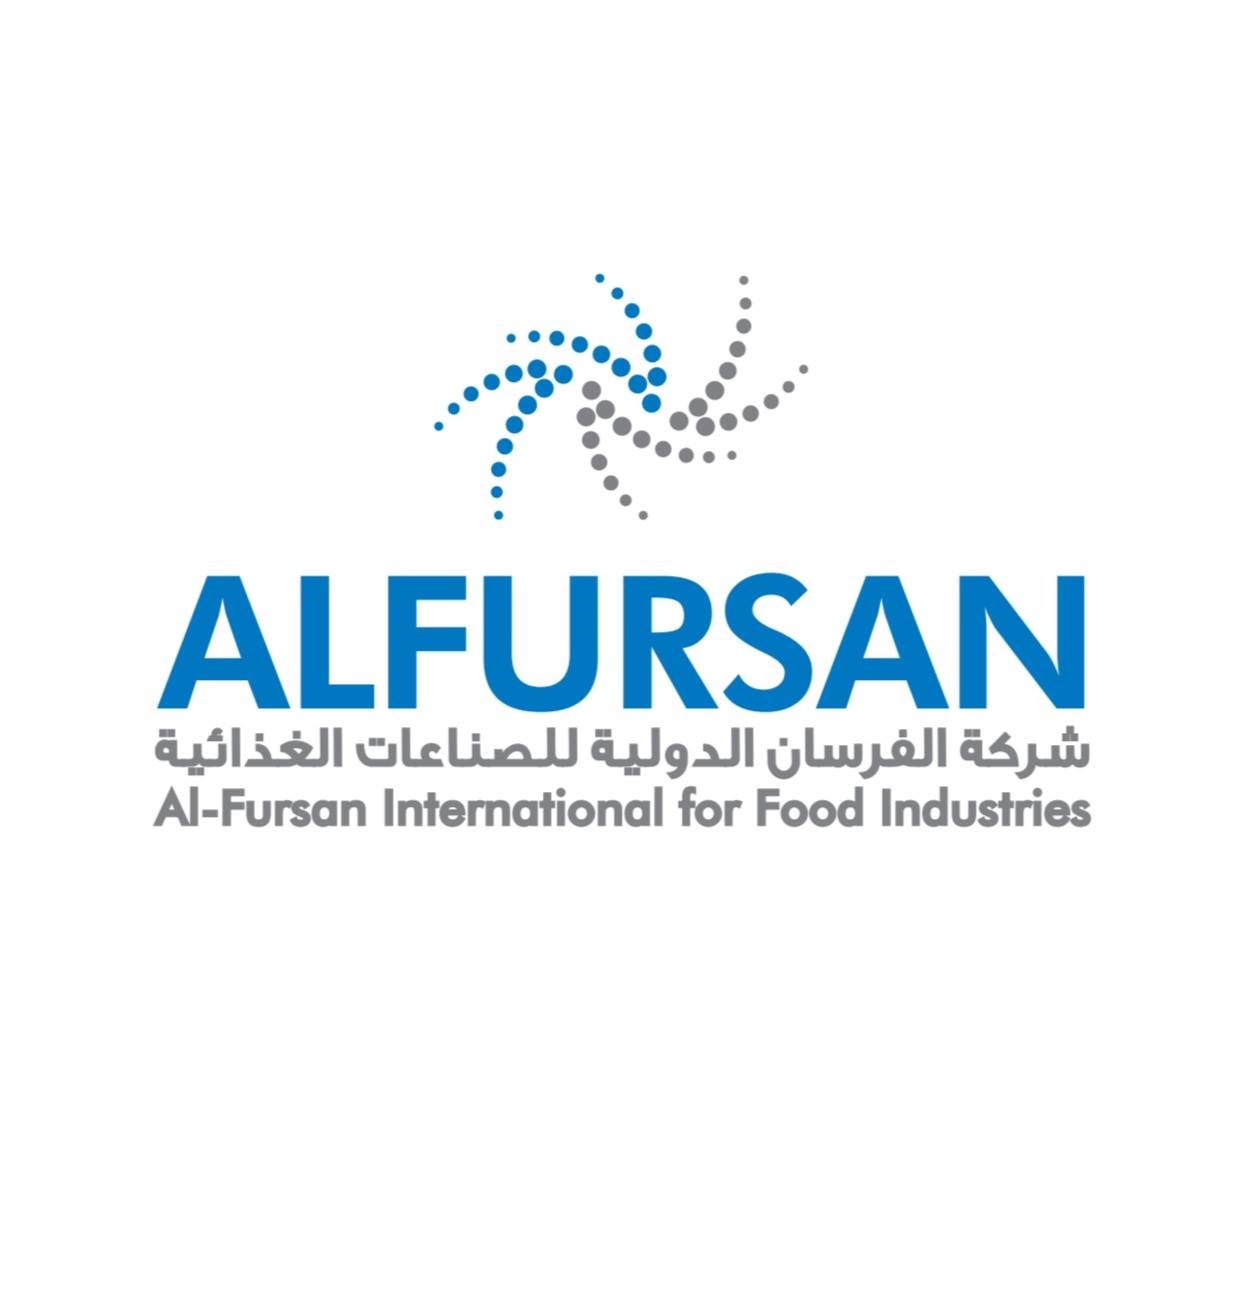 ALfursan International